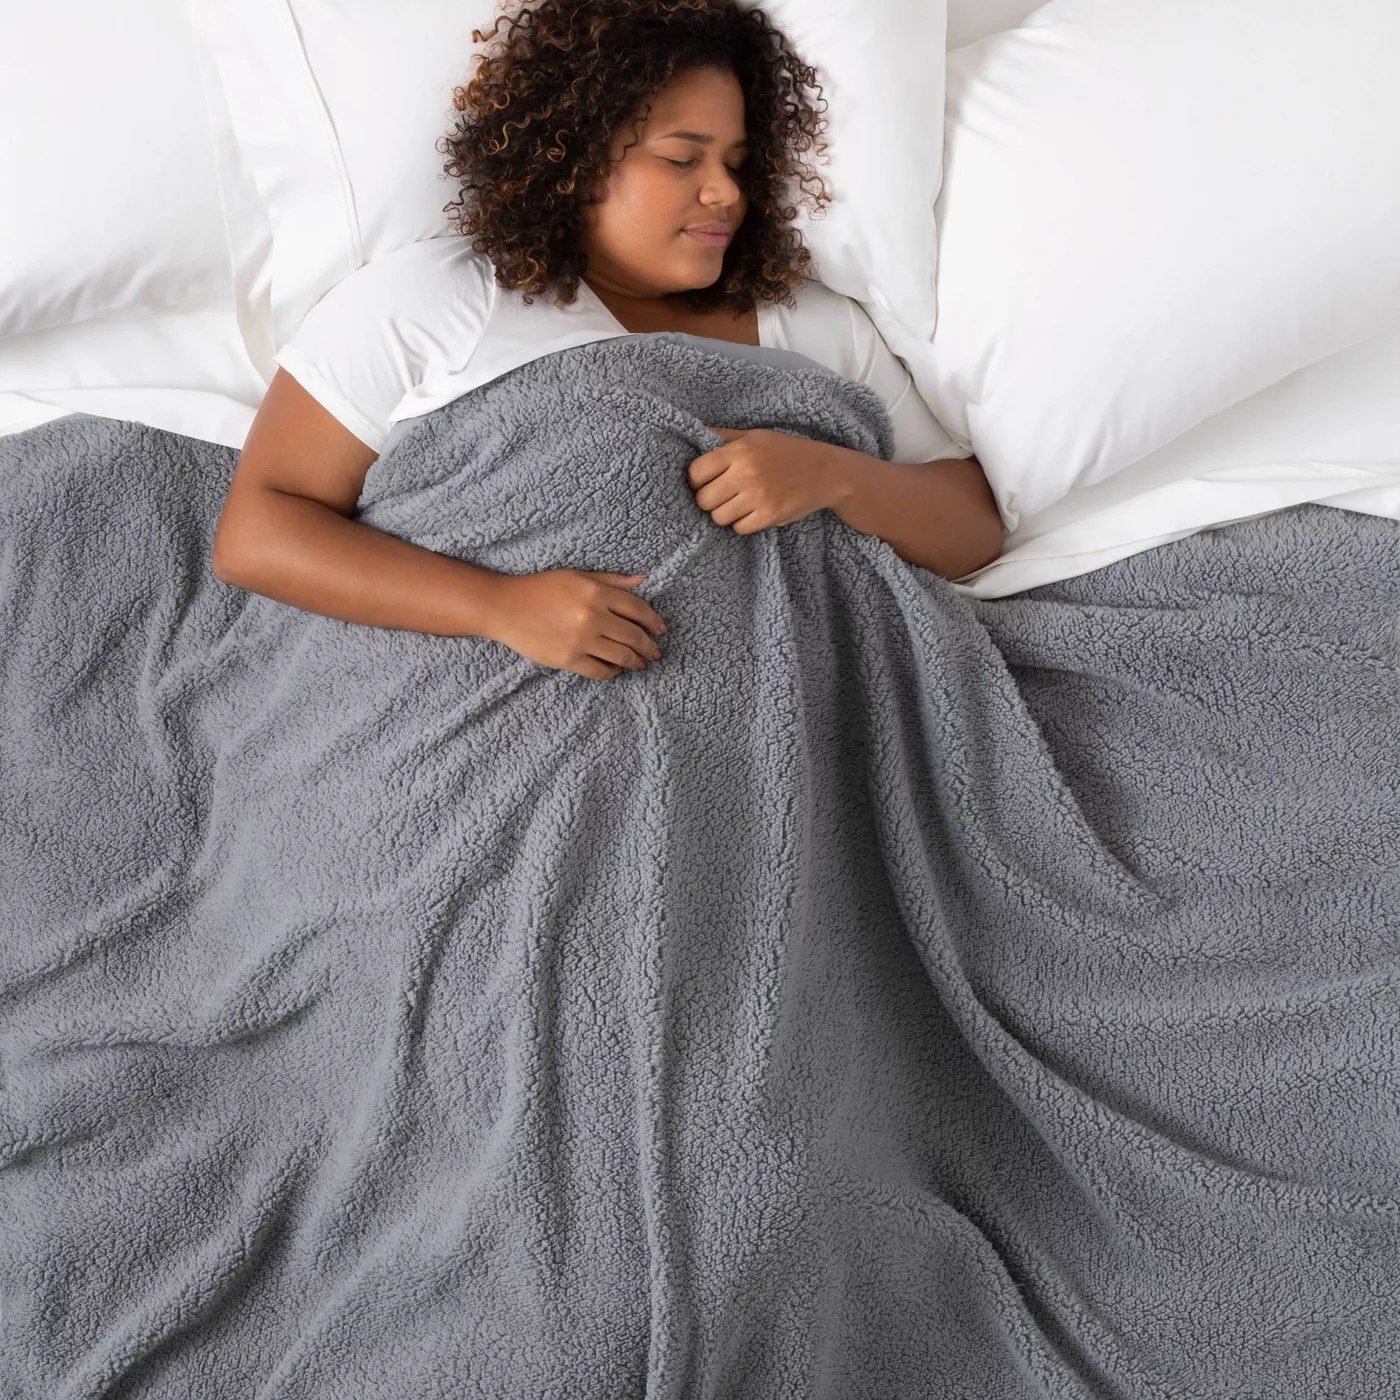 A model sleeping under the blanket in gray